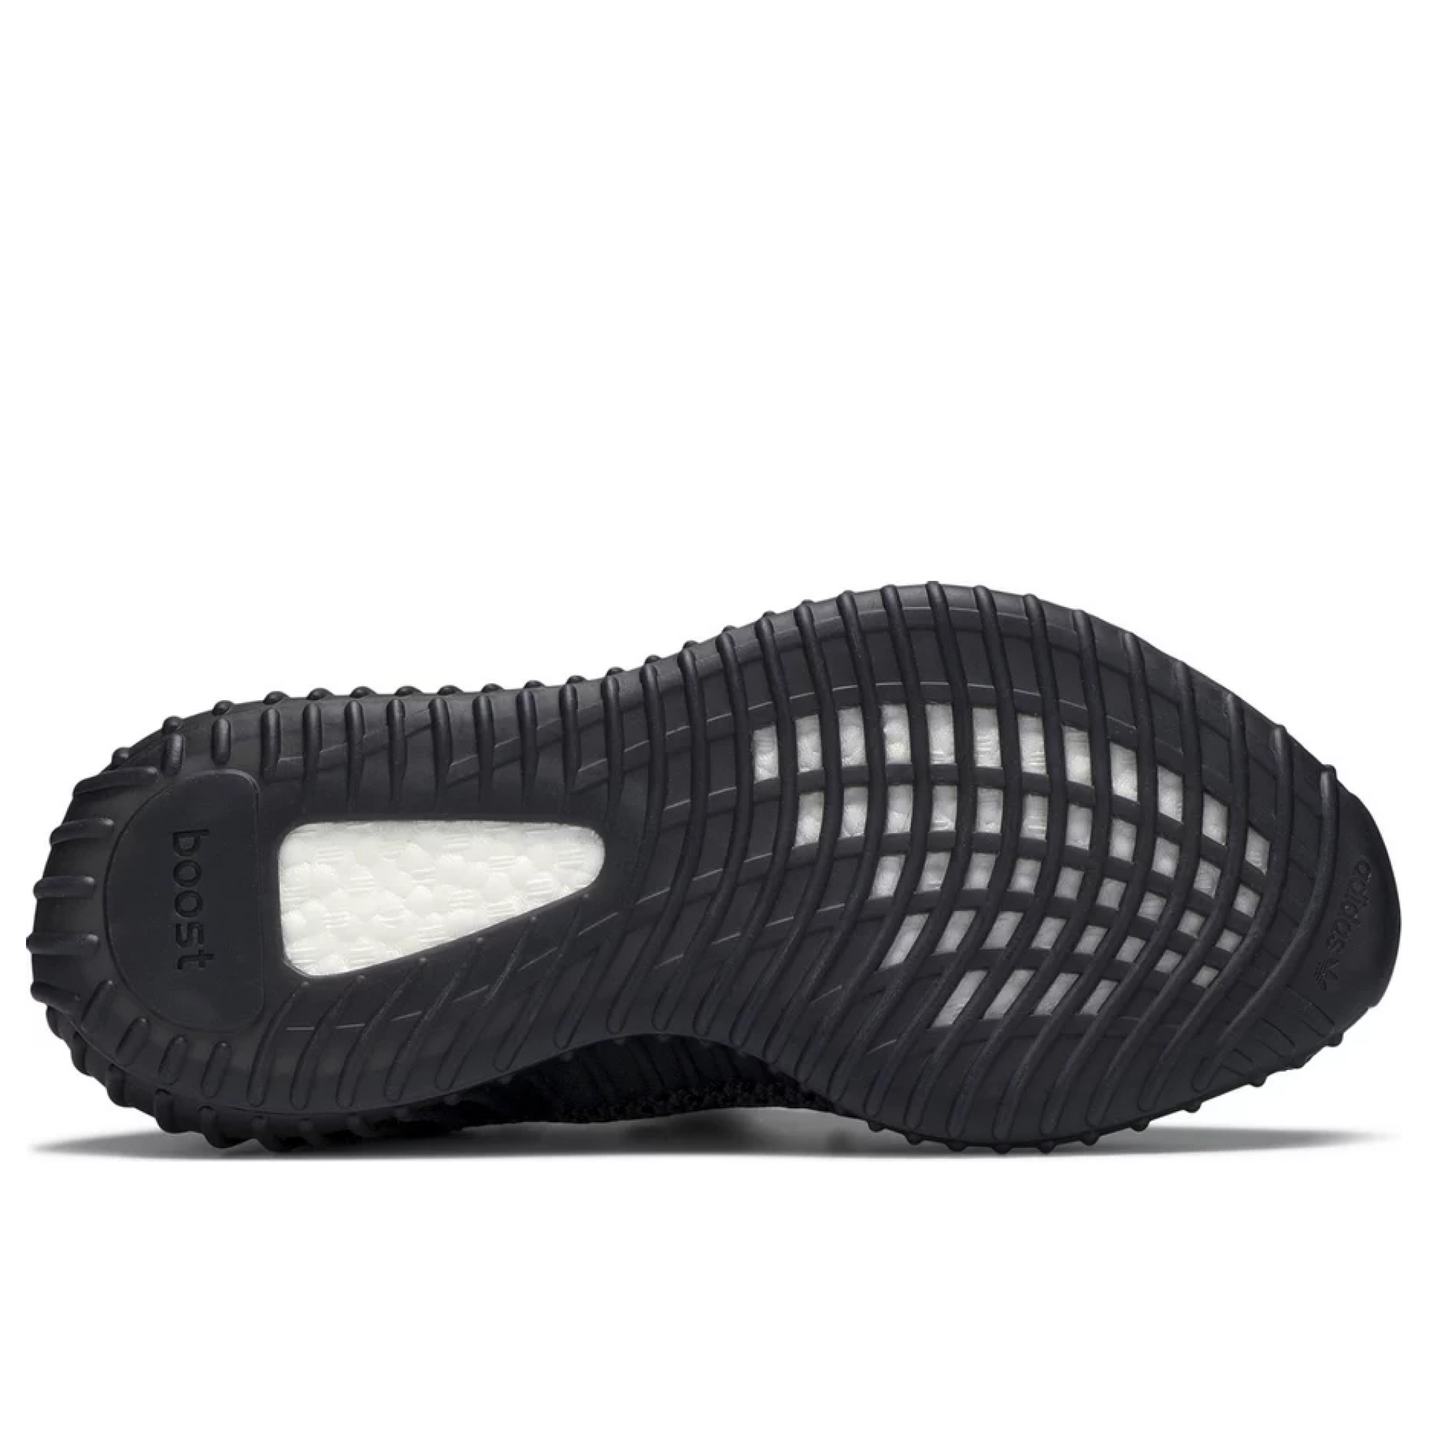 Adidas Yeezy Boost 350 V2 Black Non-Reflective